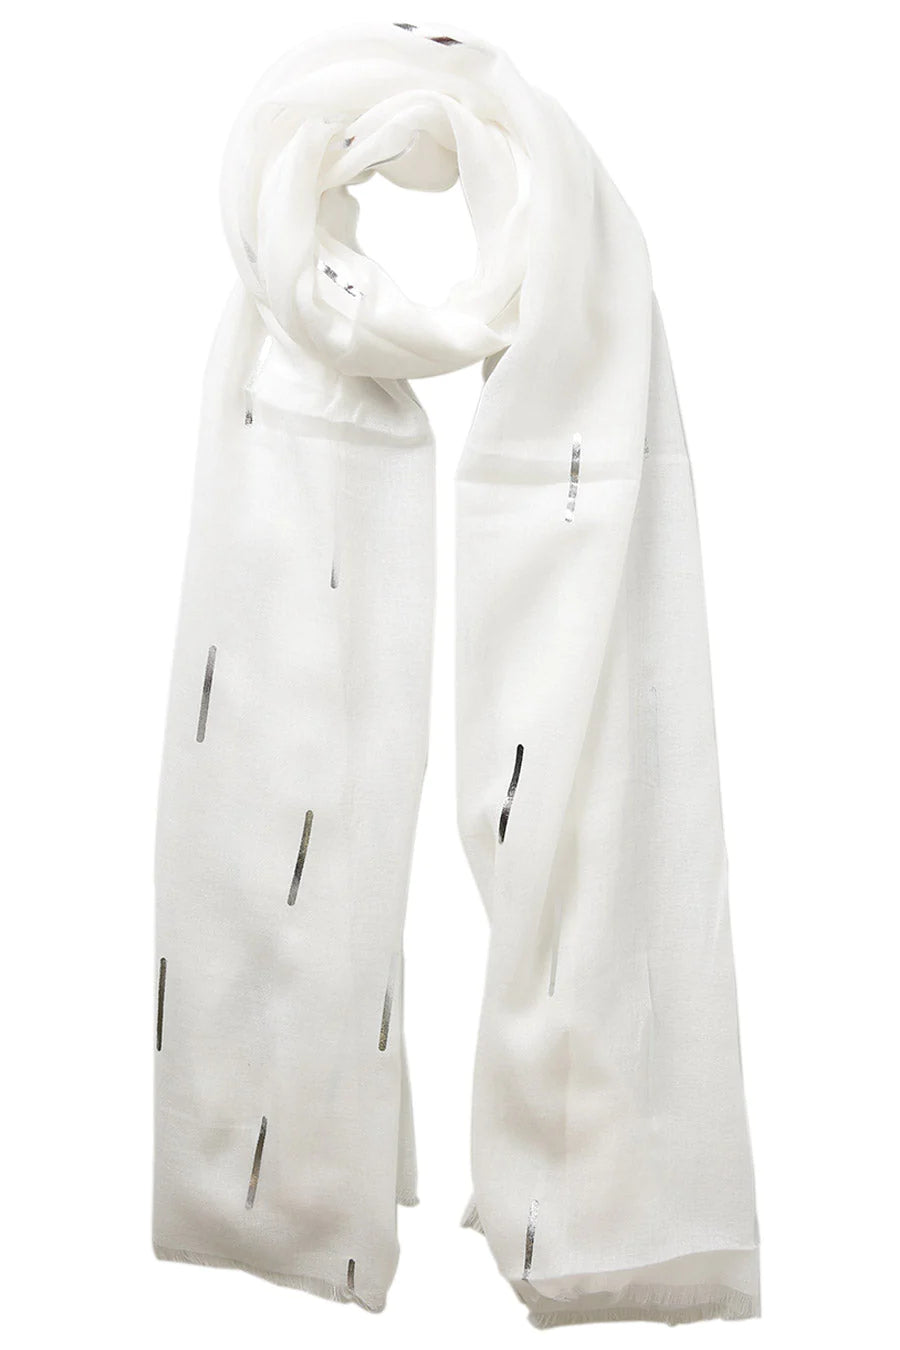 MSH - White silver scarf